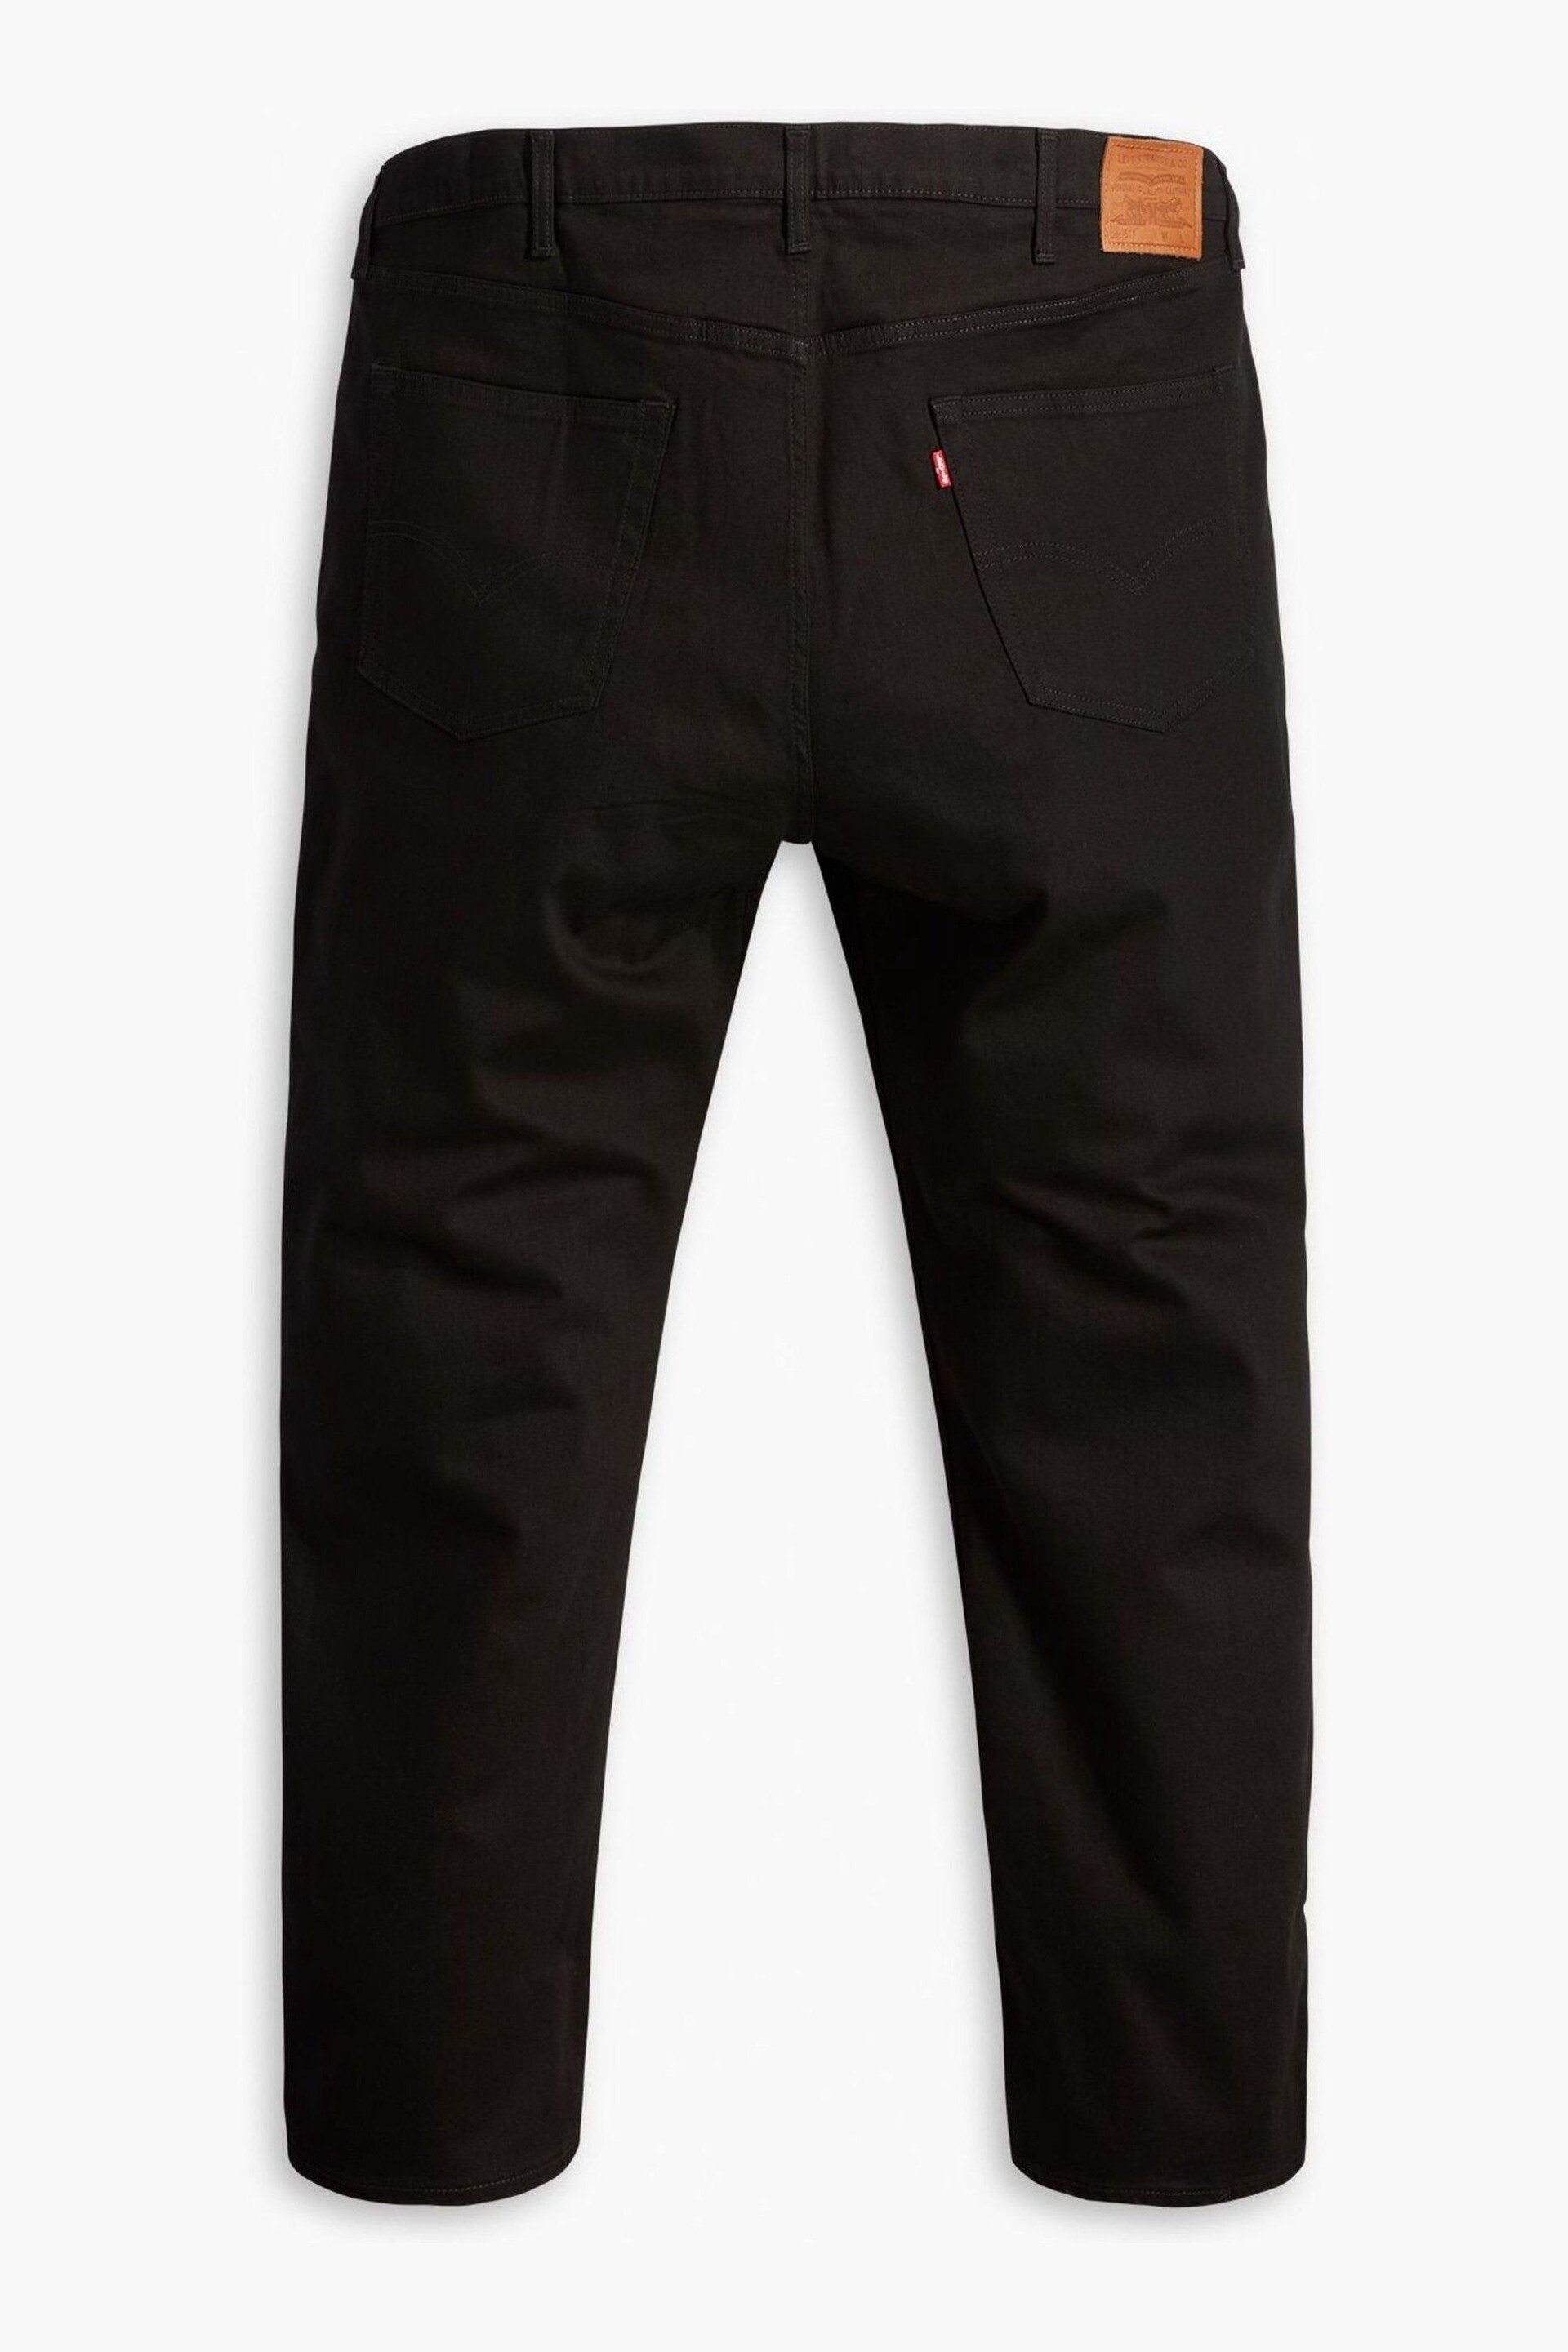 Levi's® Black 511™  Slim B&T Jeans - Image 7 of 7